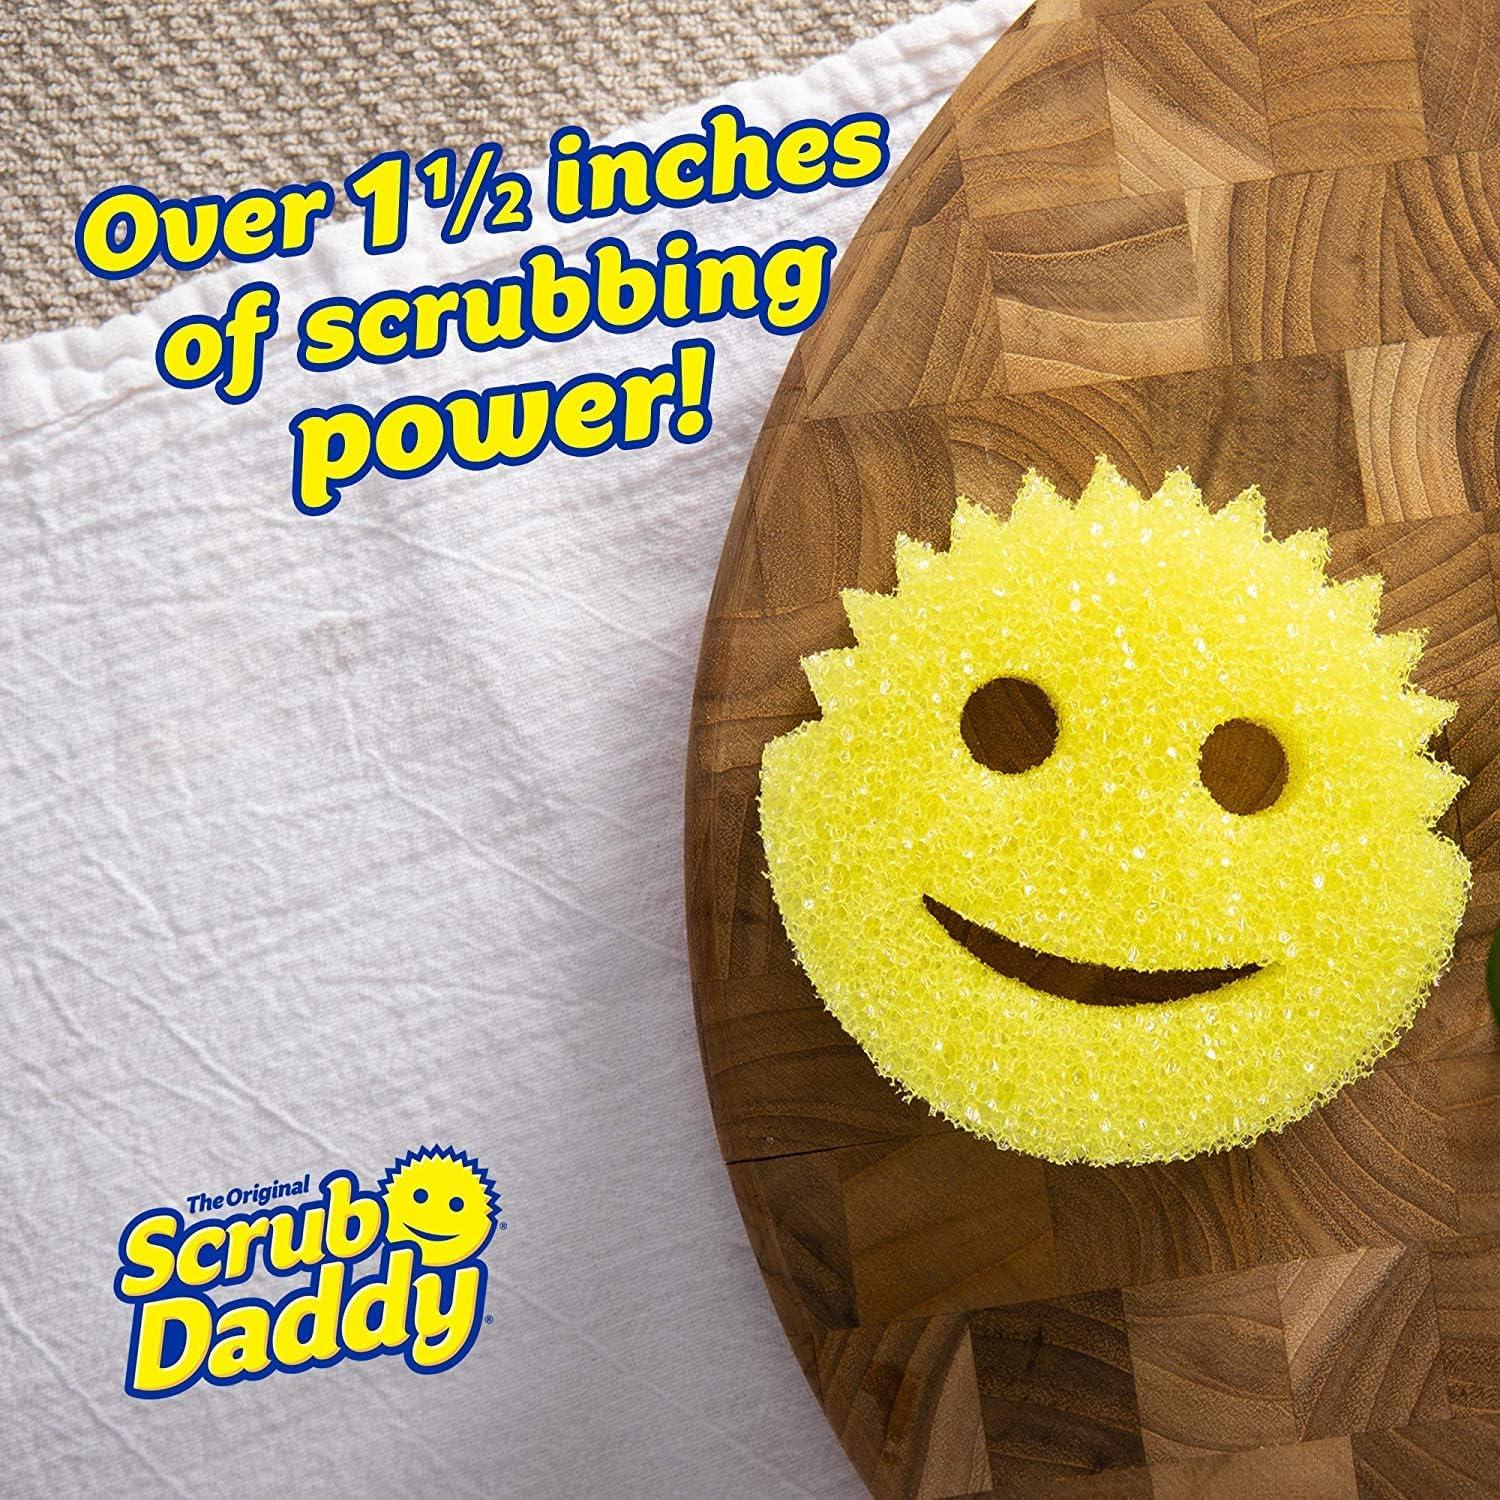 Scrub Daddy Scratch-Free Dish Sponge, 1 Count